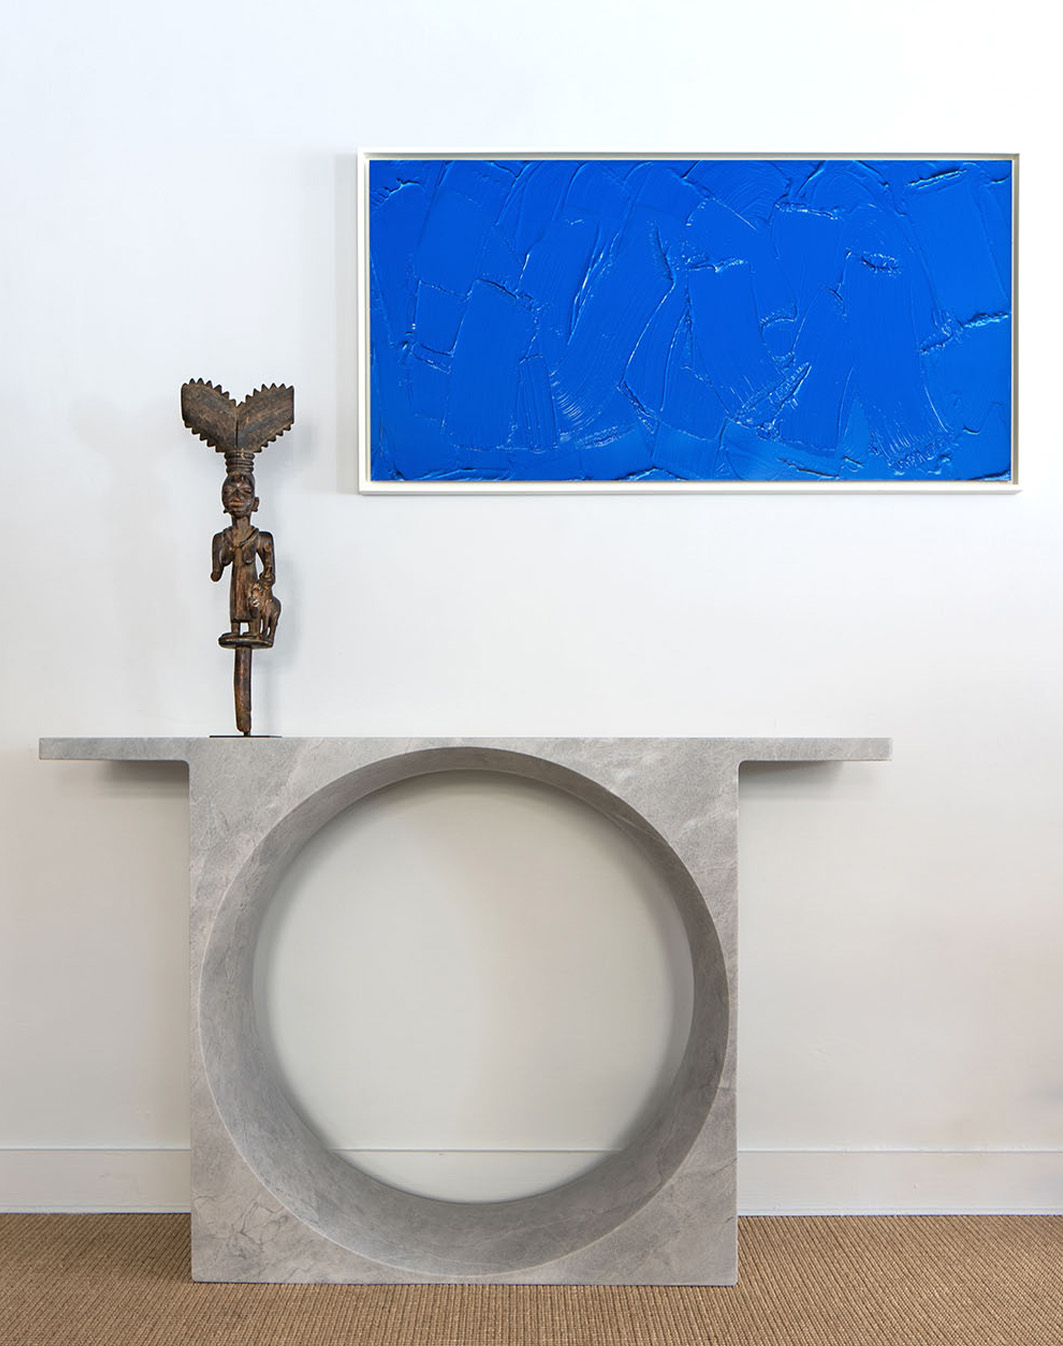 Jasper Morrison - Lucas Ratton x kamel mennour x Galerie kreo in Saint-Tropez